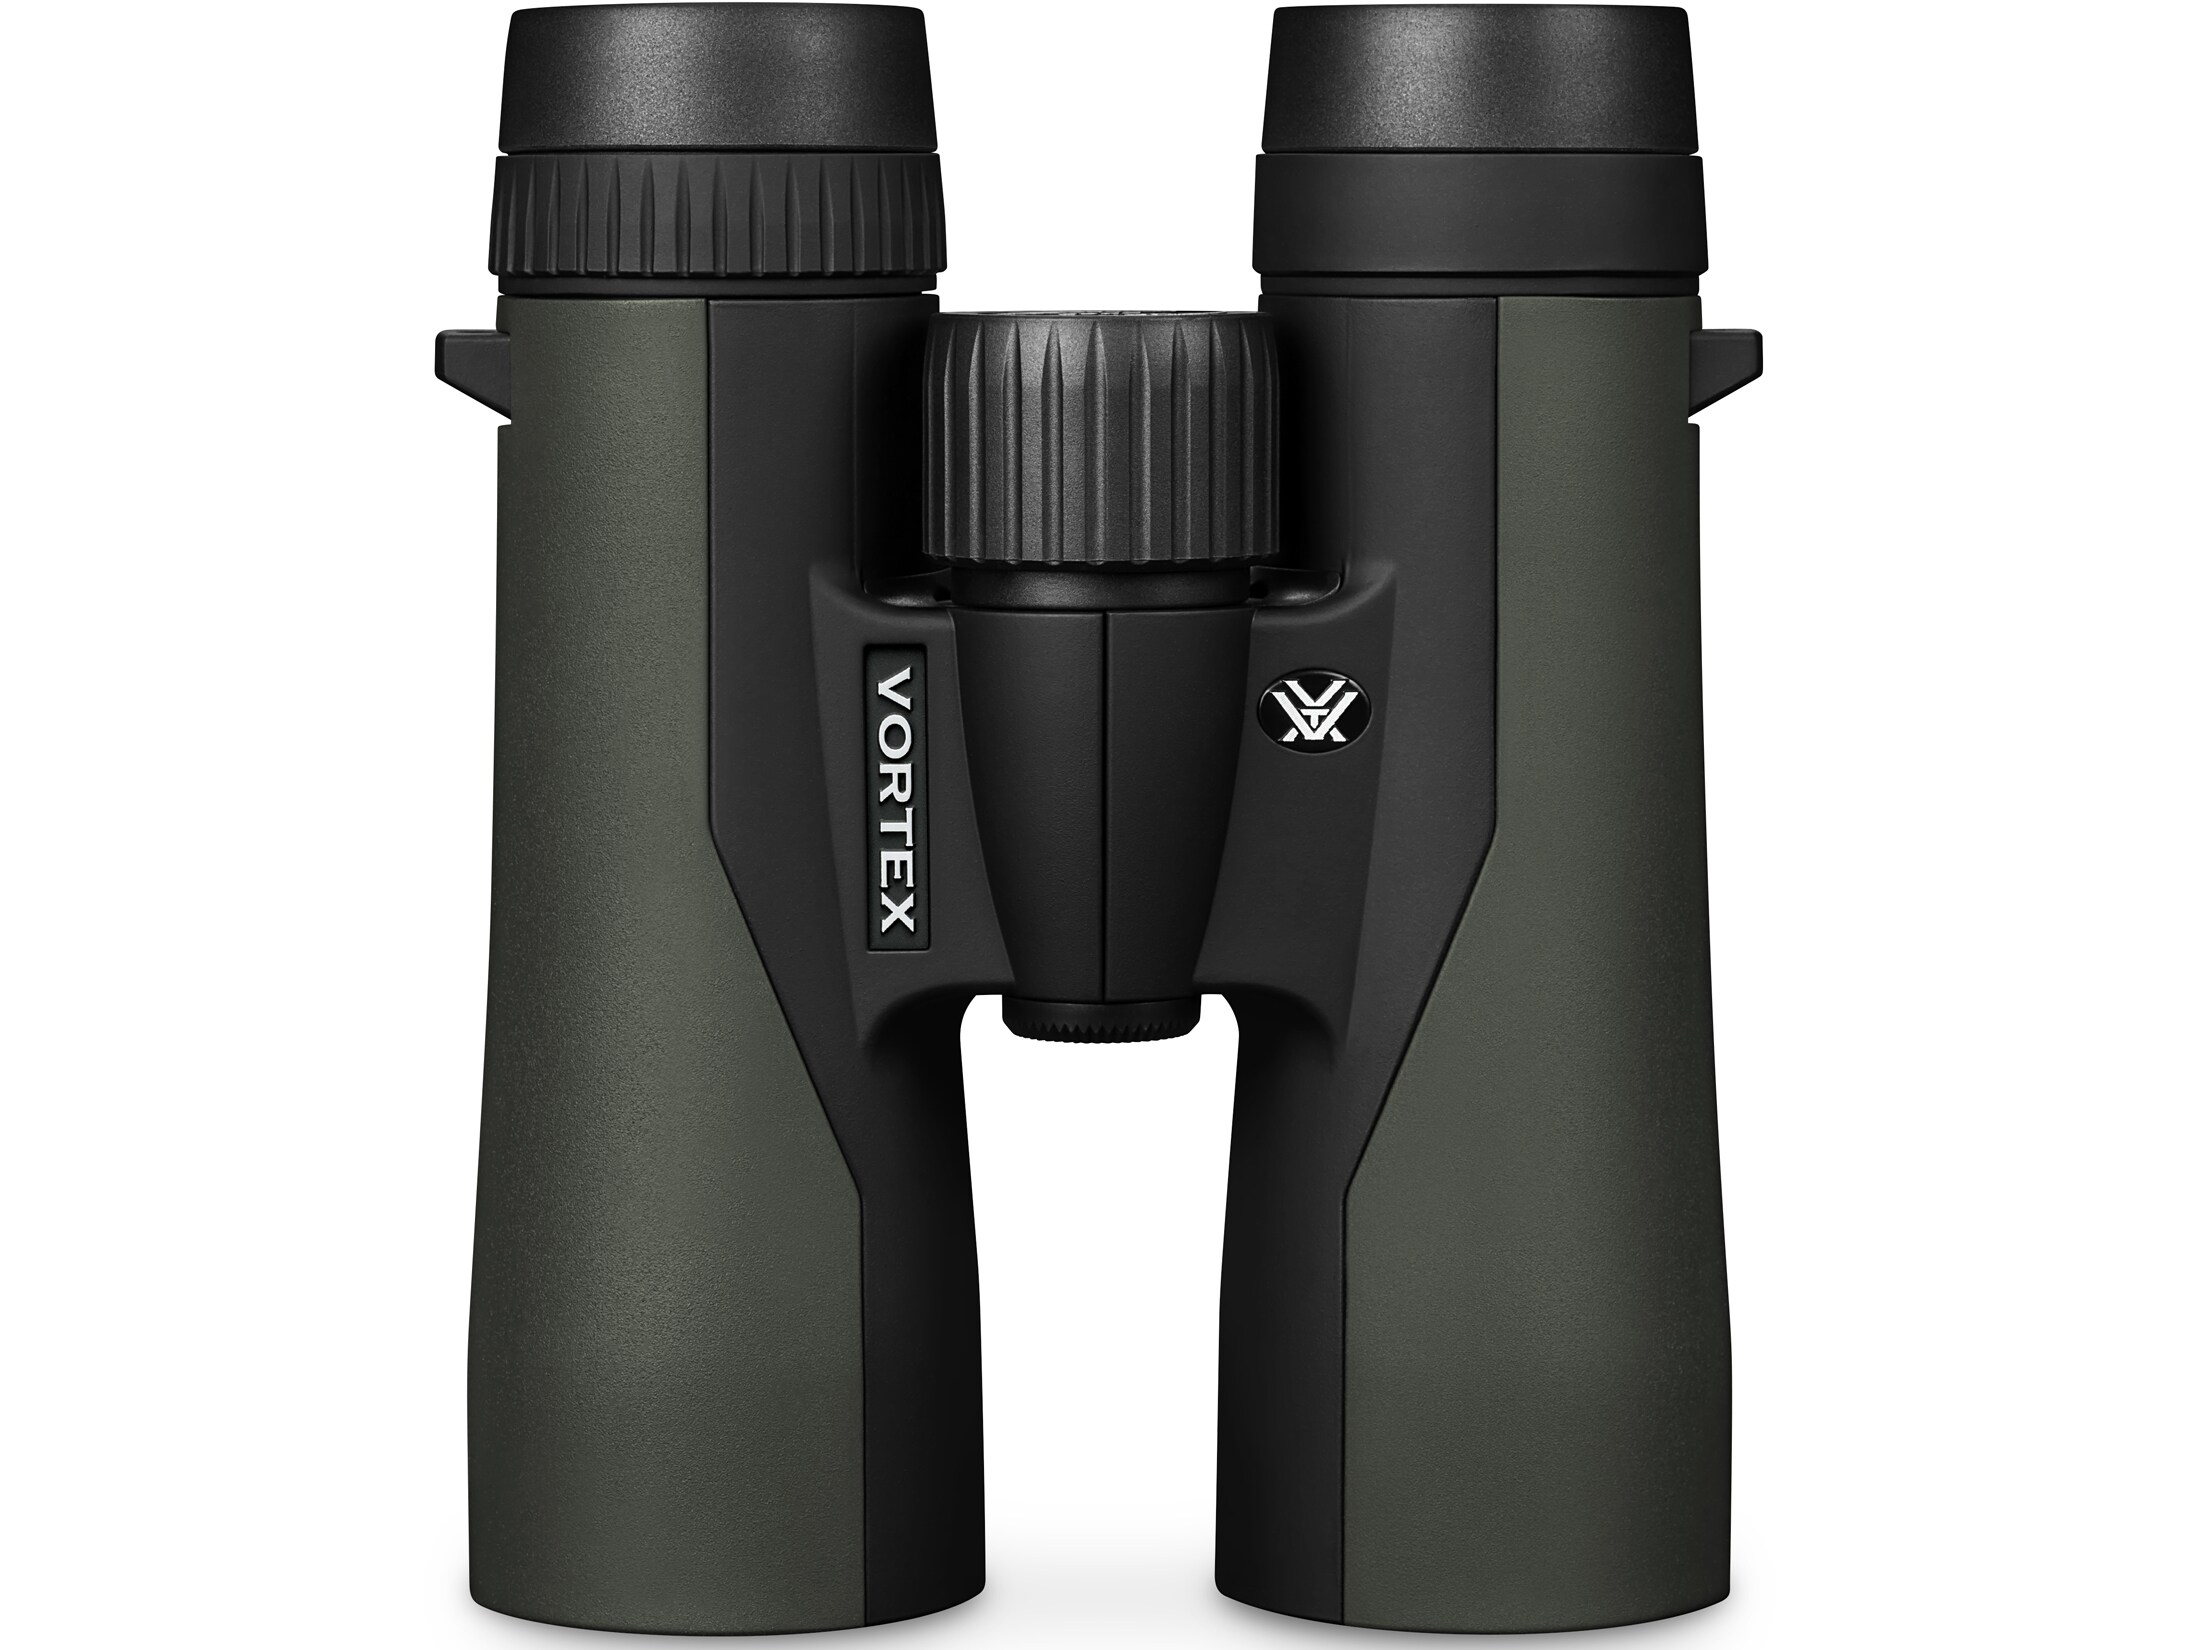 Vortex Optics Crossfire HD Binocular For Sale